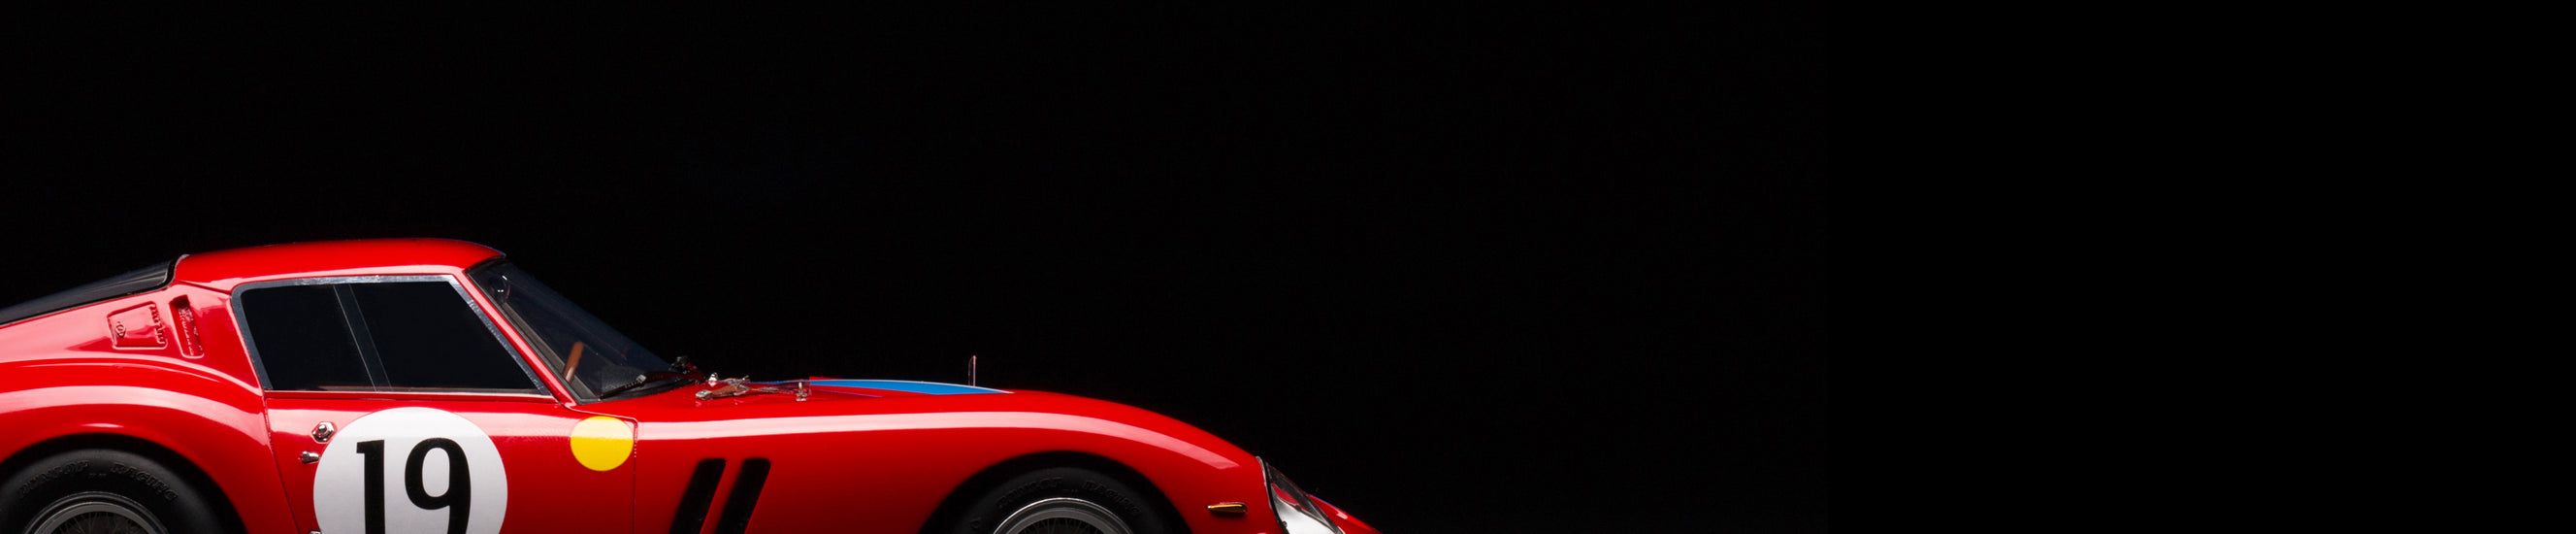 Ferrari at Le Mans